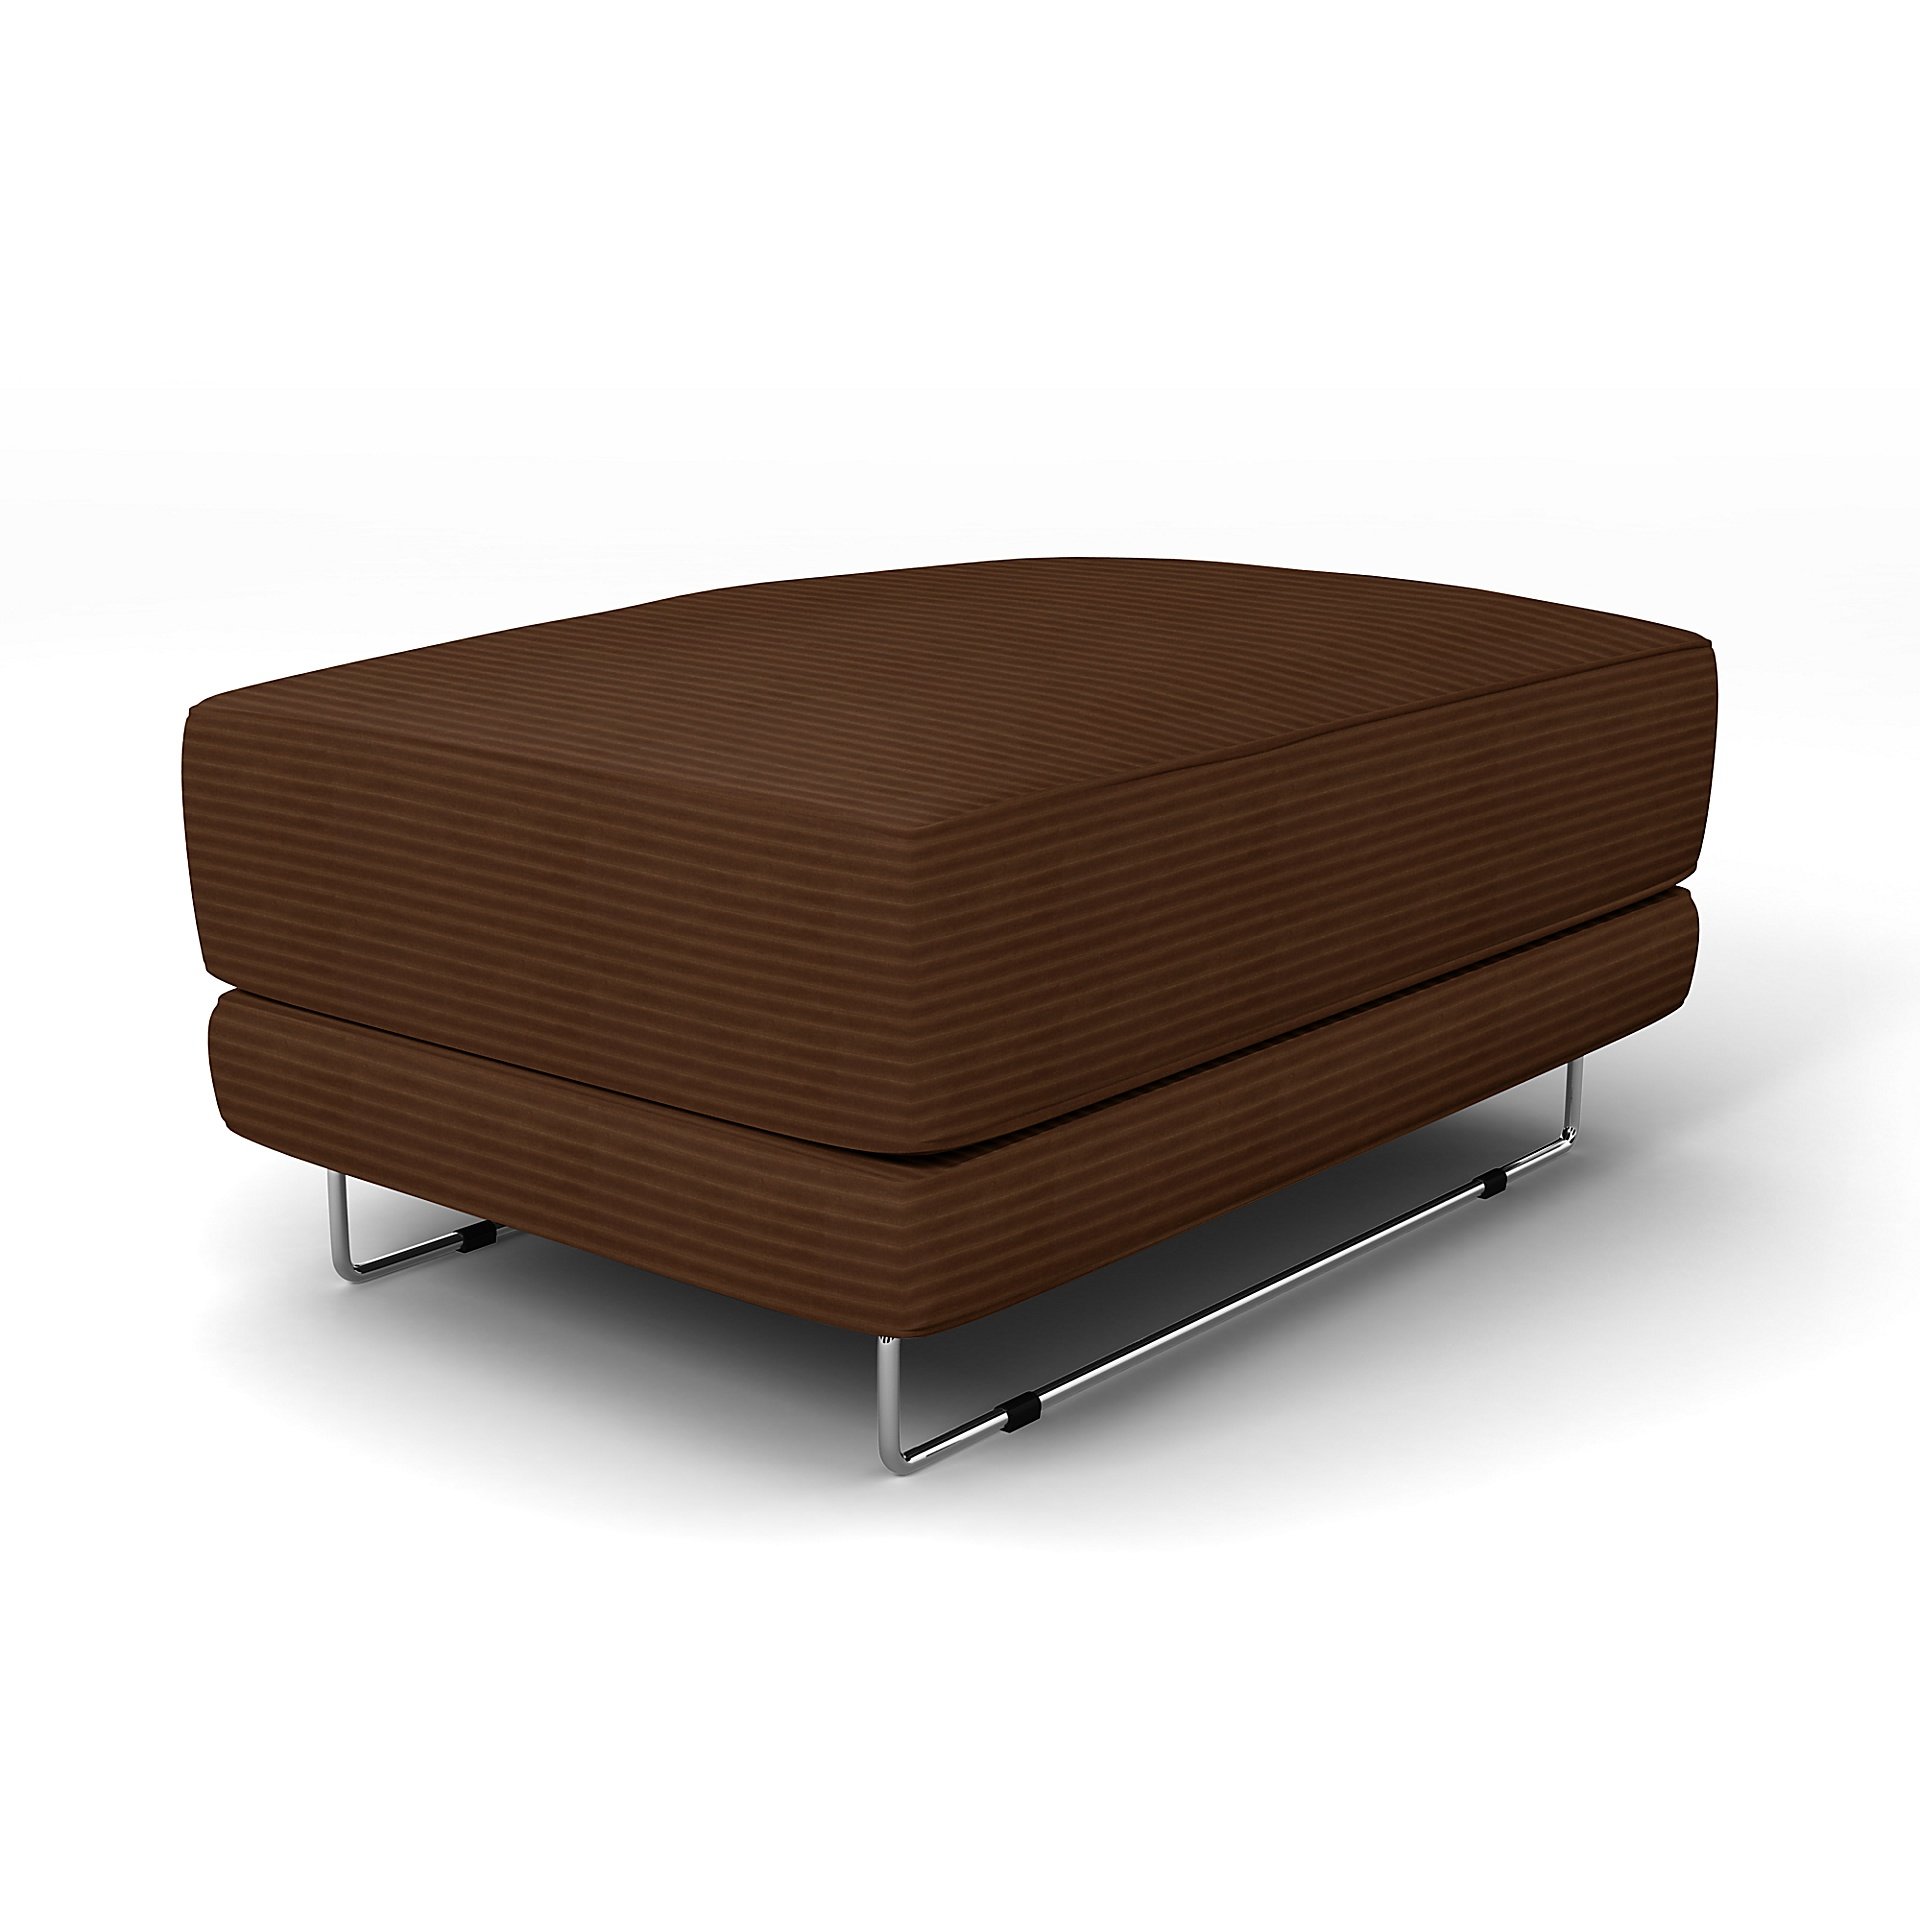 IKEA - Tylosand Footstool Cover, Chocolate Brown, Corduroy - Bemz